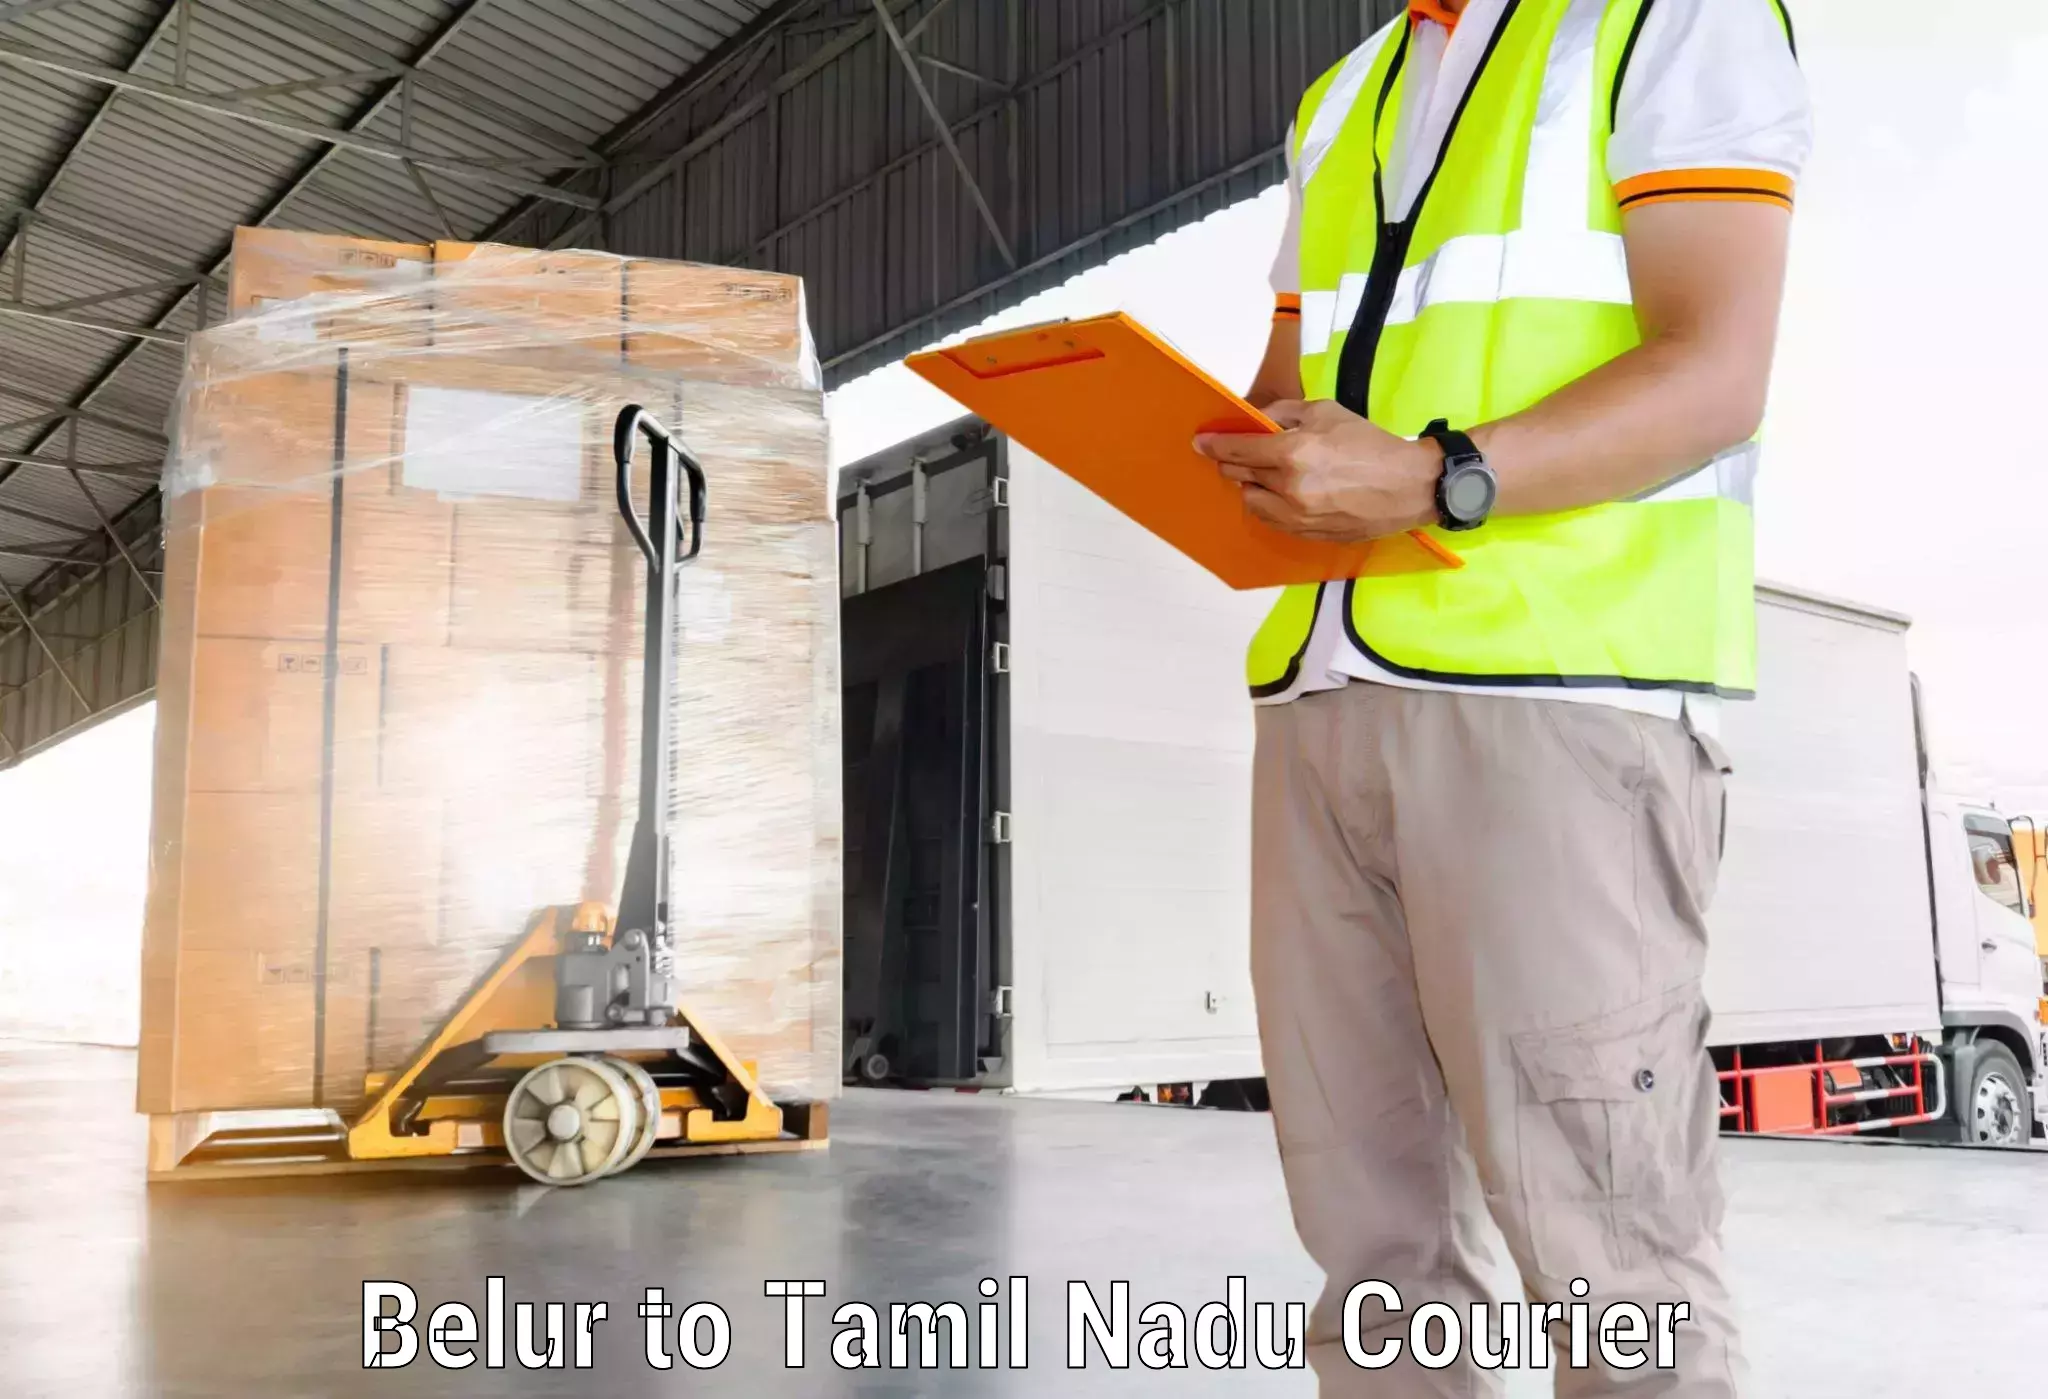 Flexible delivery schedules Belur to Thiruvarur